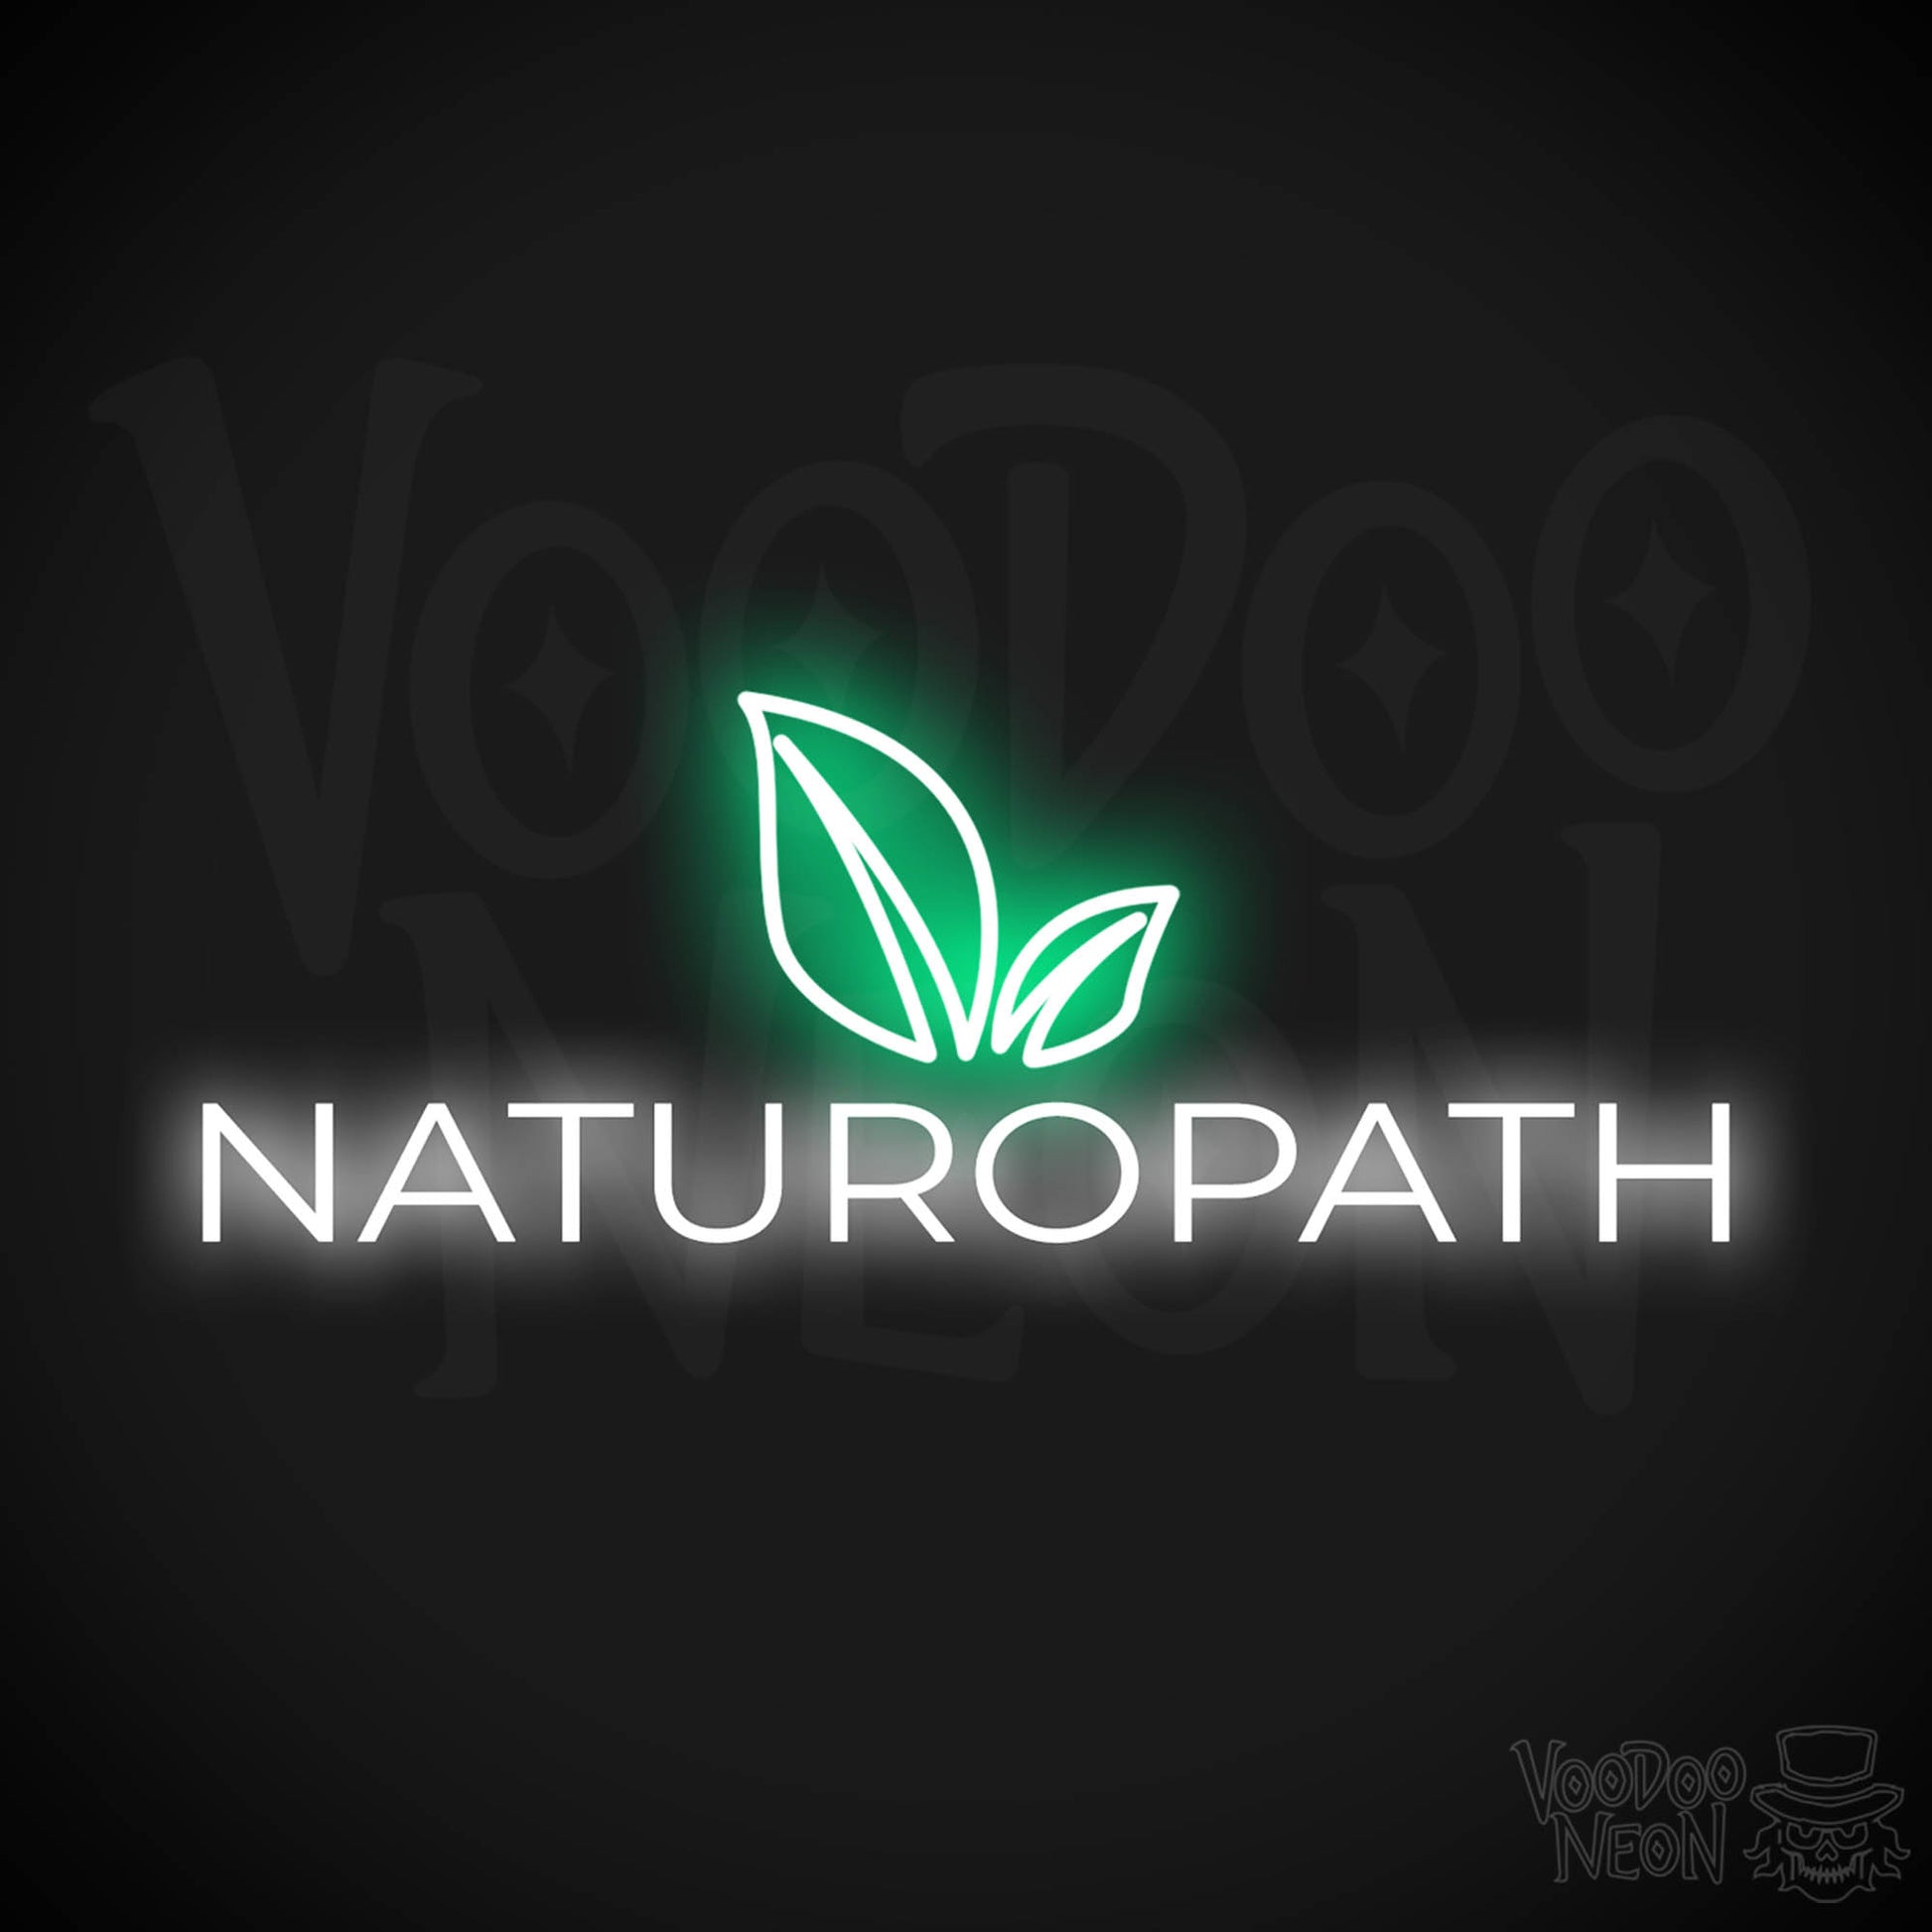 Naturopath LED Neon - Multi-Color